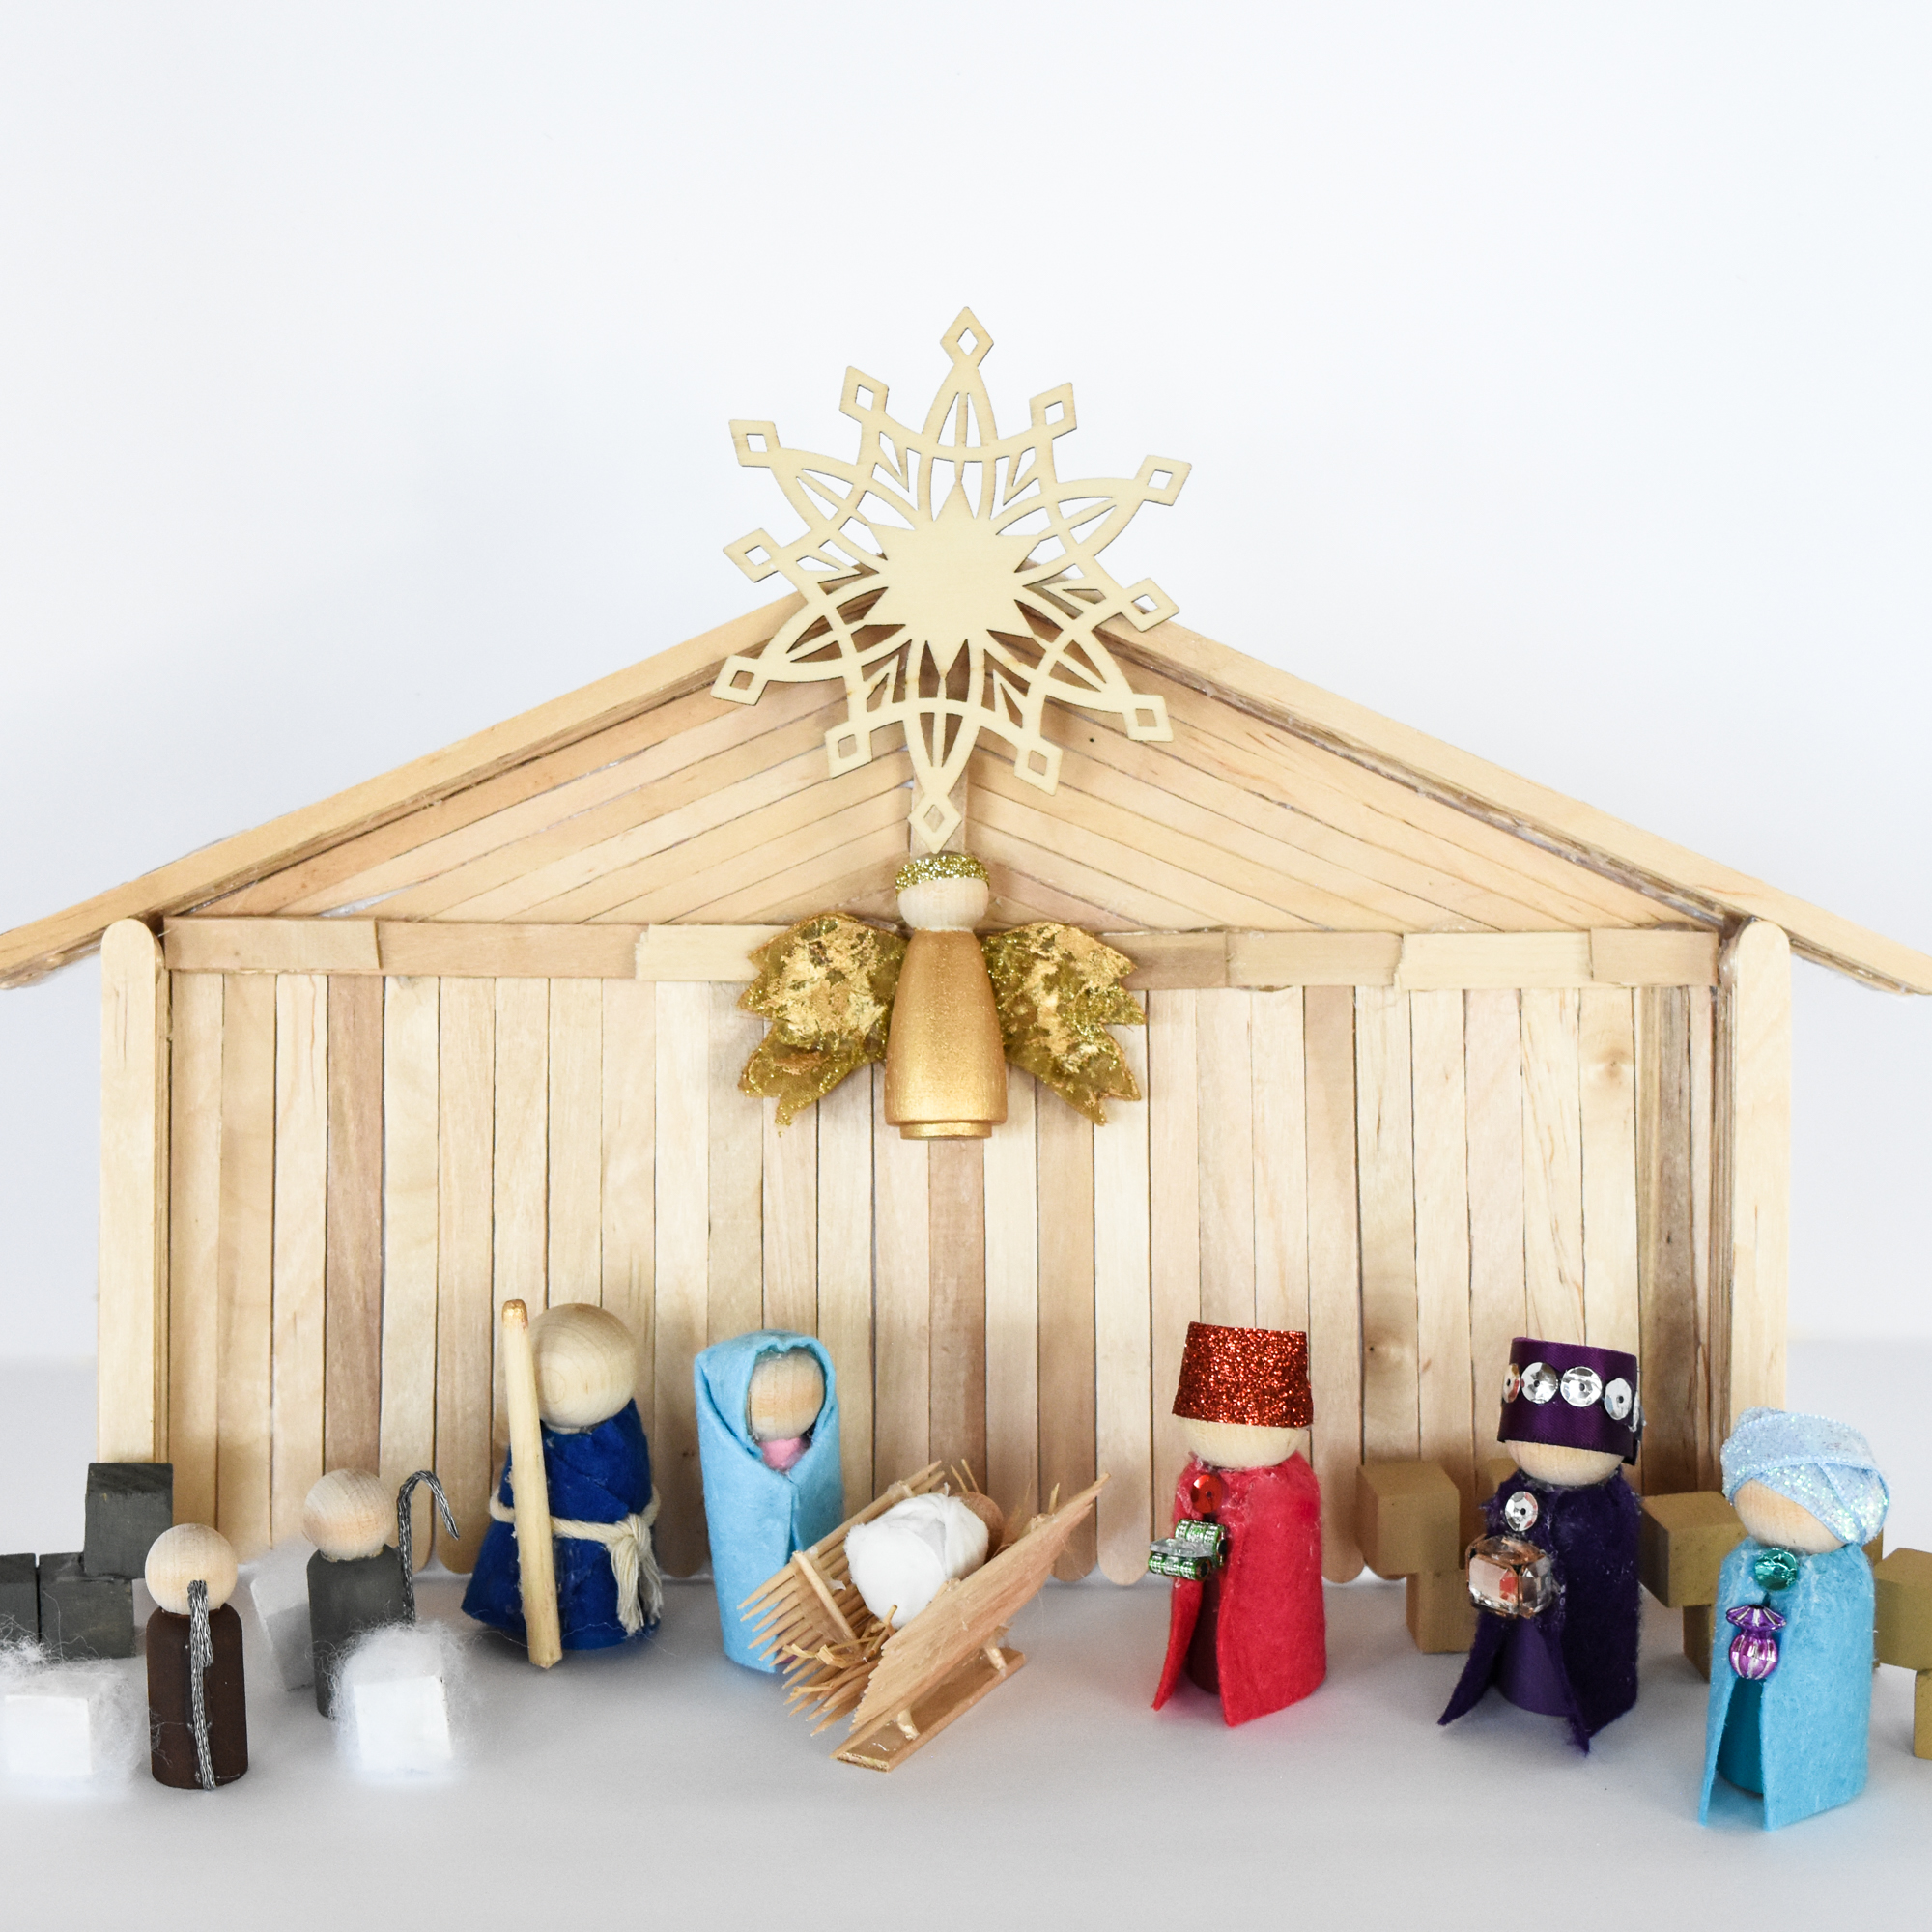 15 Kid-Friendly Christmas Decorations